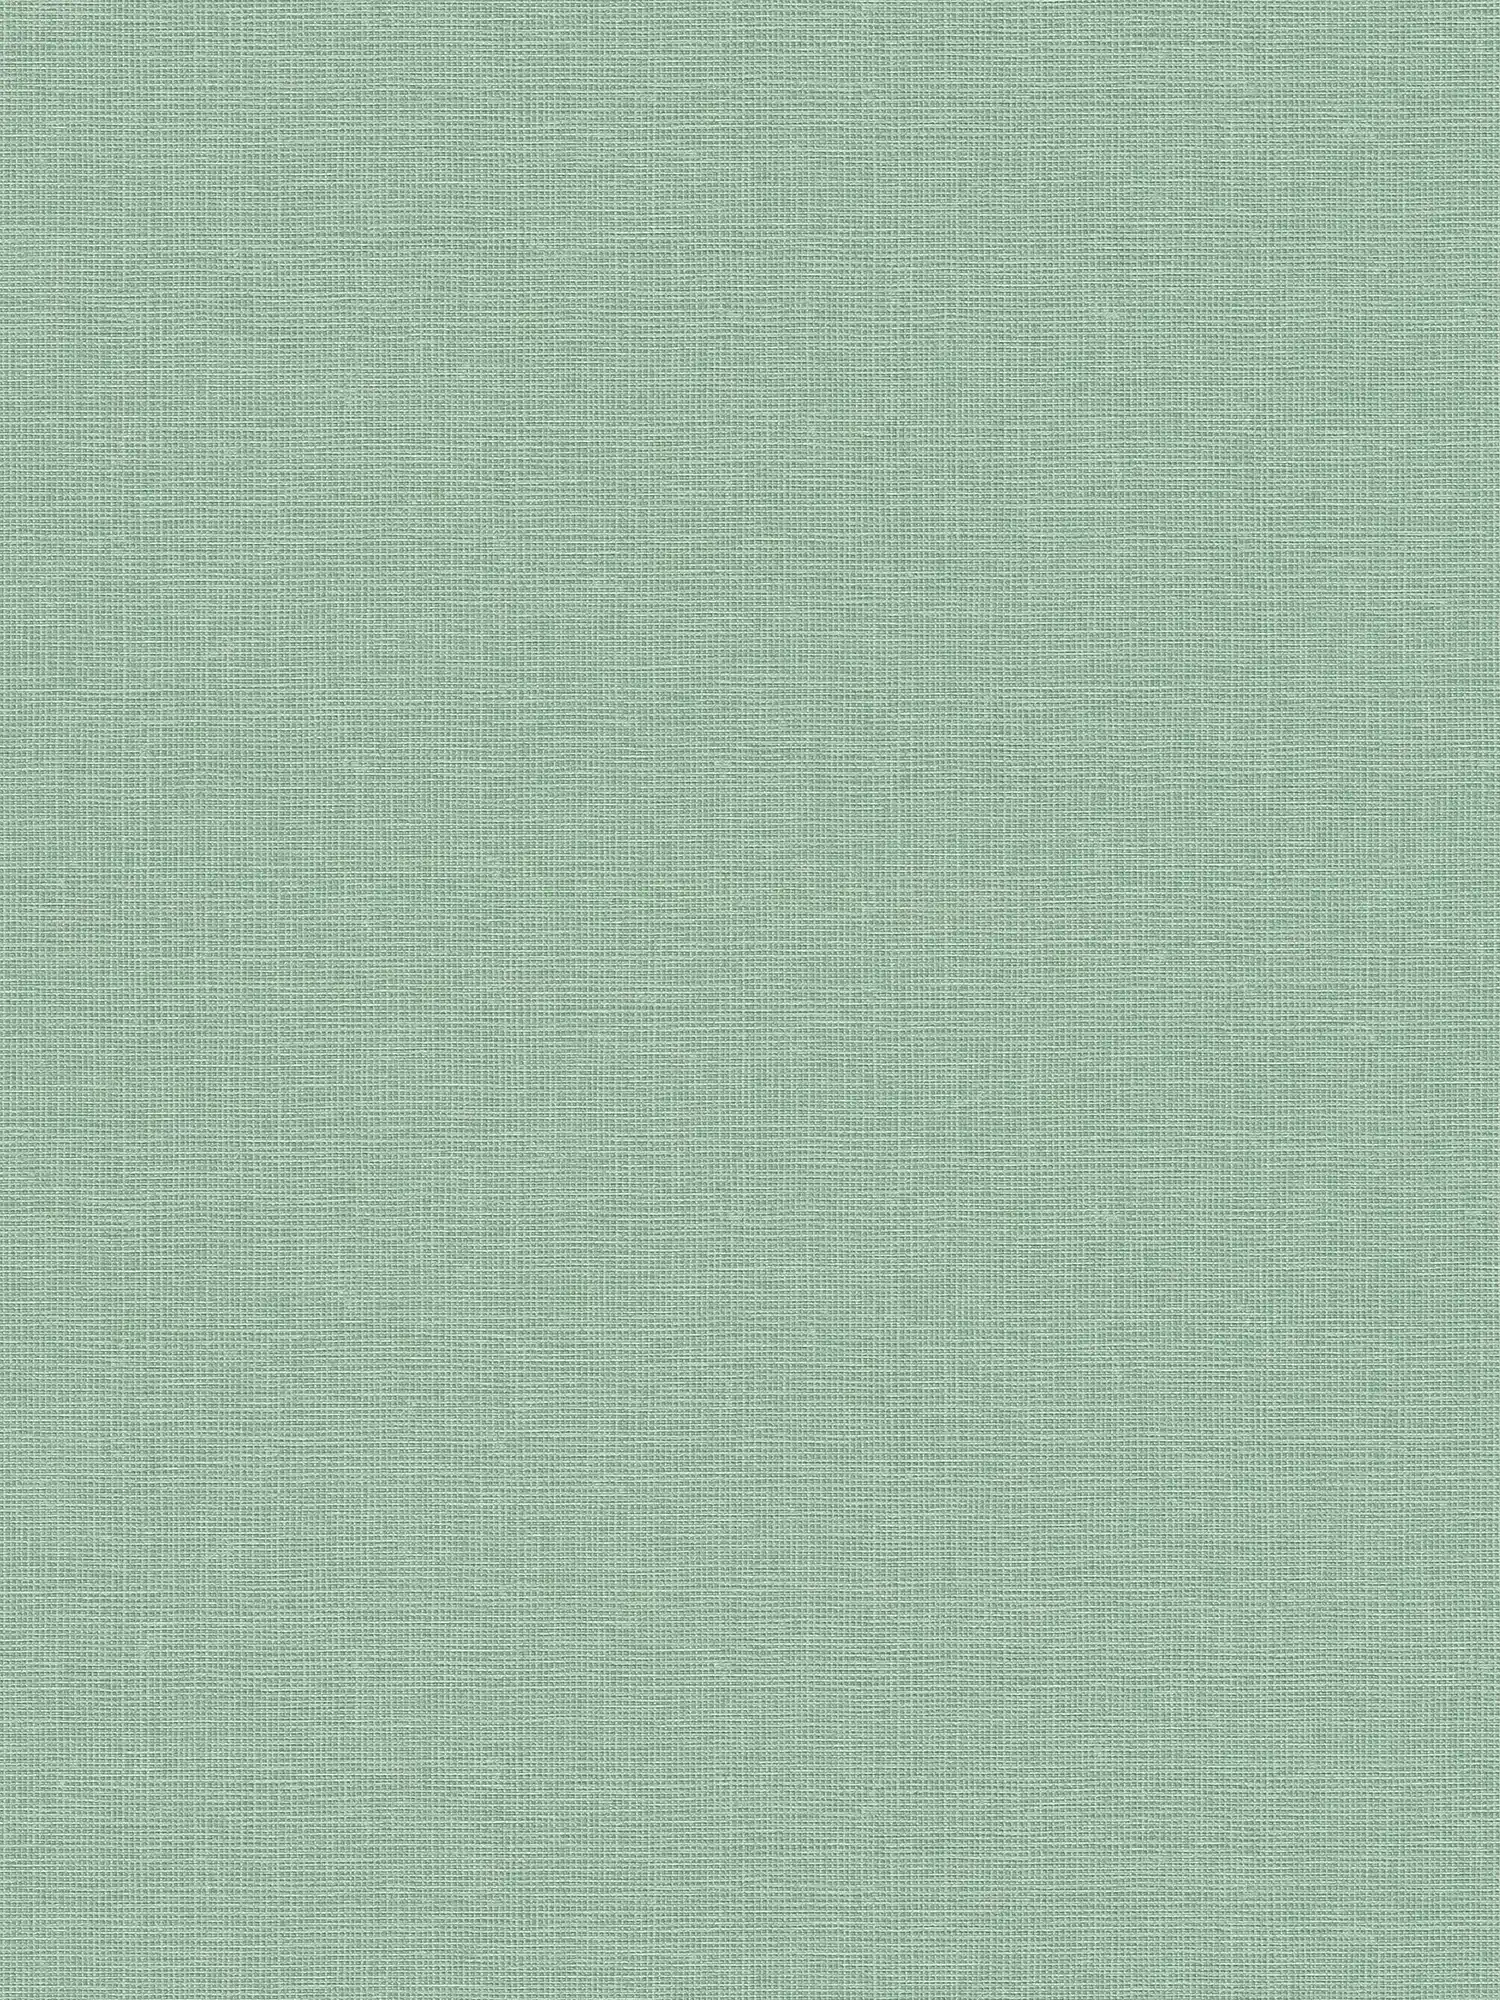 Non-woven wallpaper plain with linen texture - green
